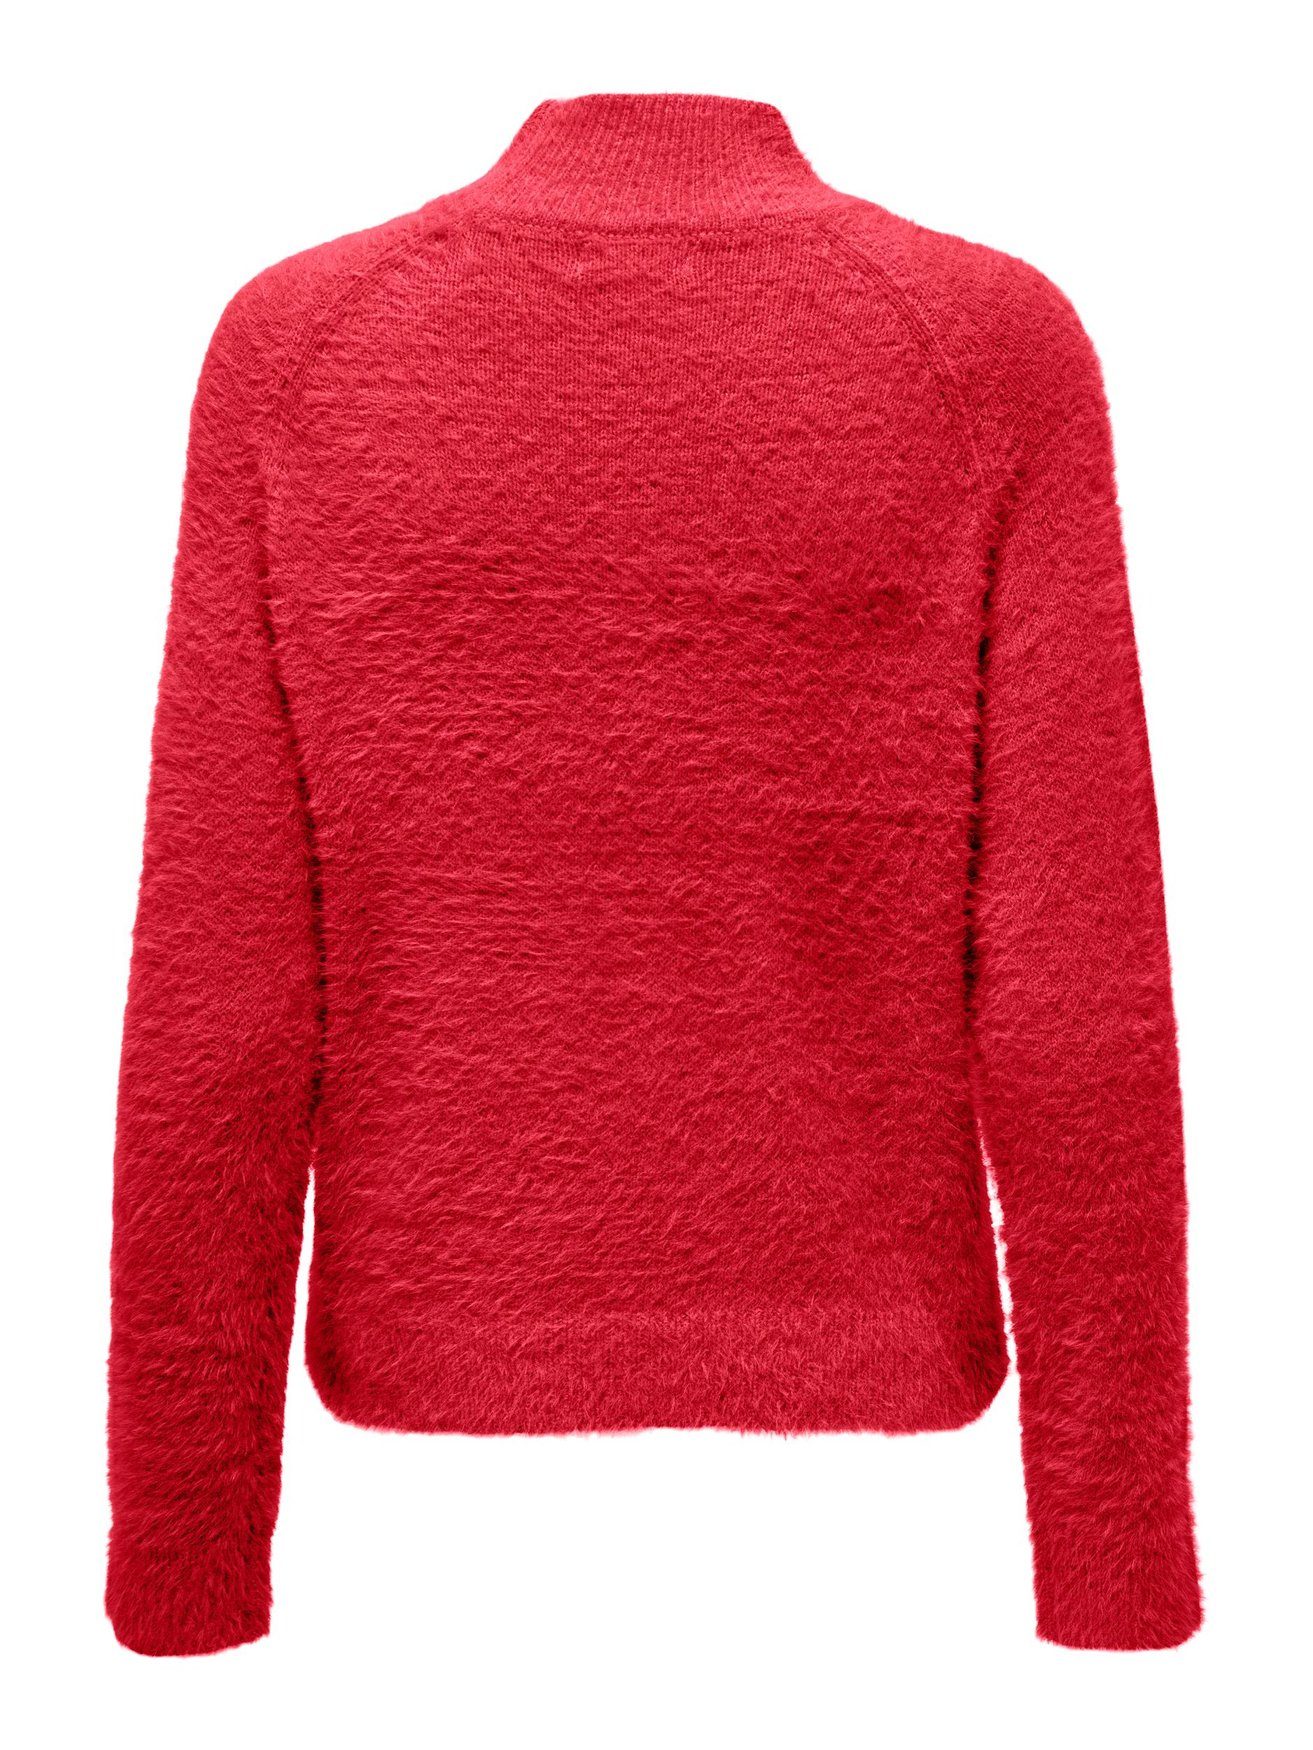 Rot JACQUELINE YONG in de JDYJOLA Flauschiger Strickpullover Pullover Sweater 6193 Stehkragen Gestrickt